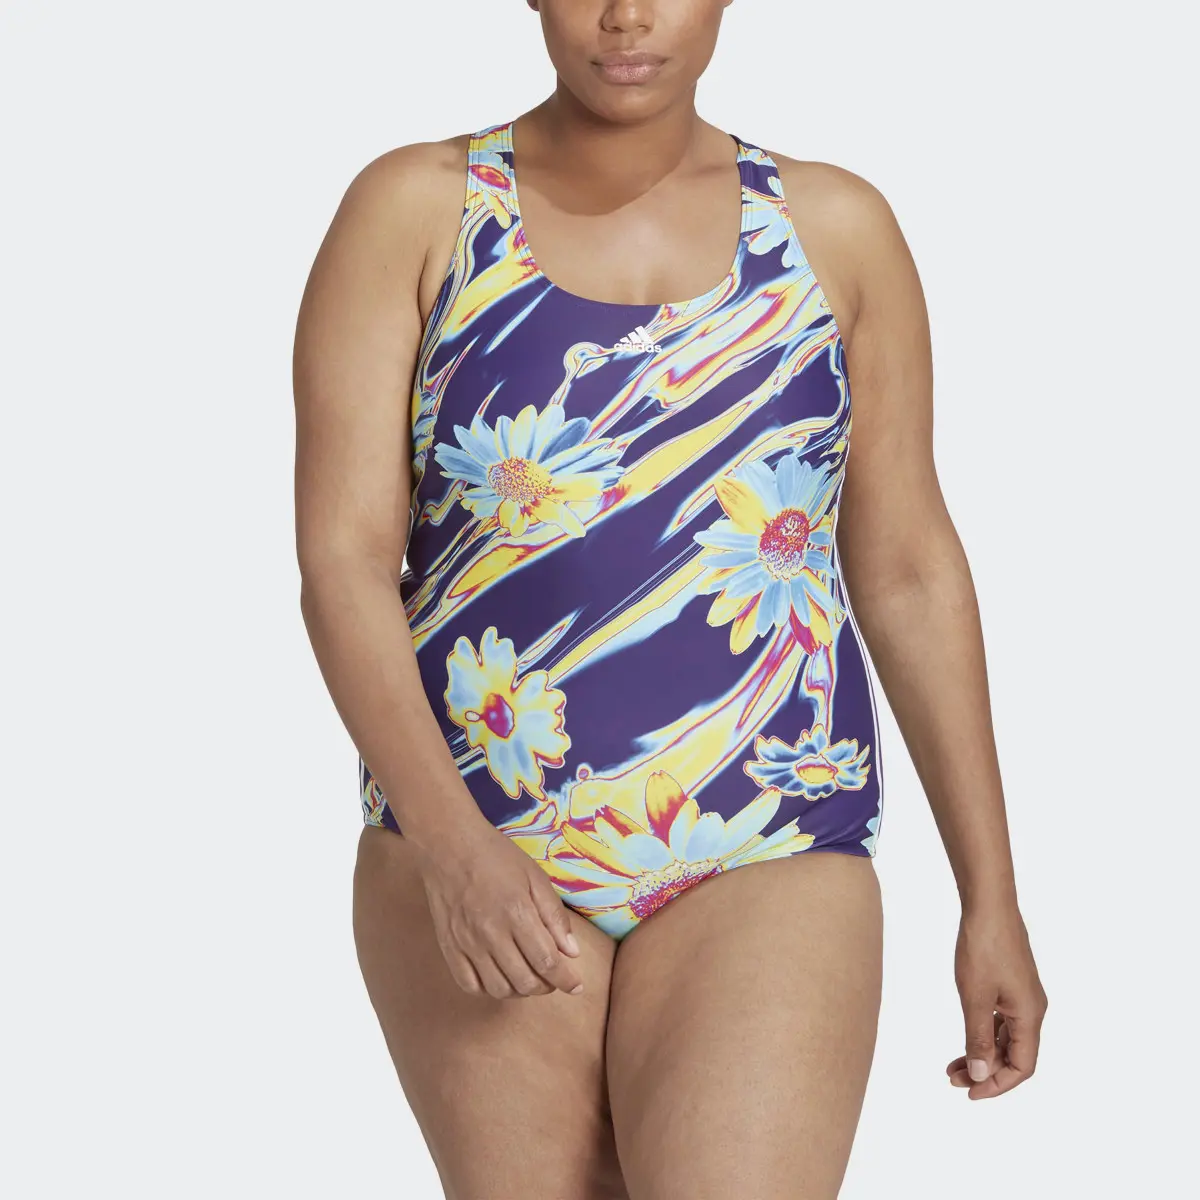 Adidas Positivisea 3-Stripes Graphic Swimsuit (Plus Size). 1